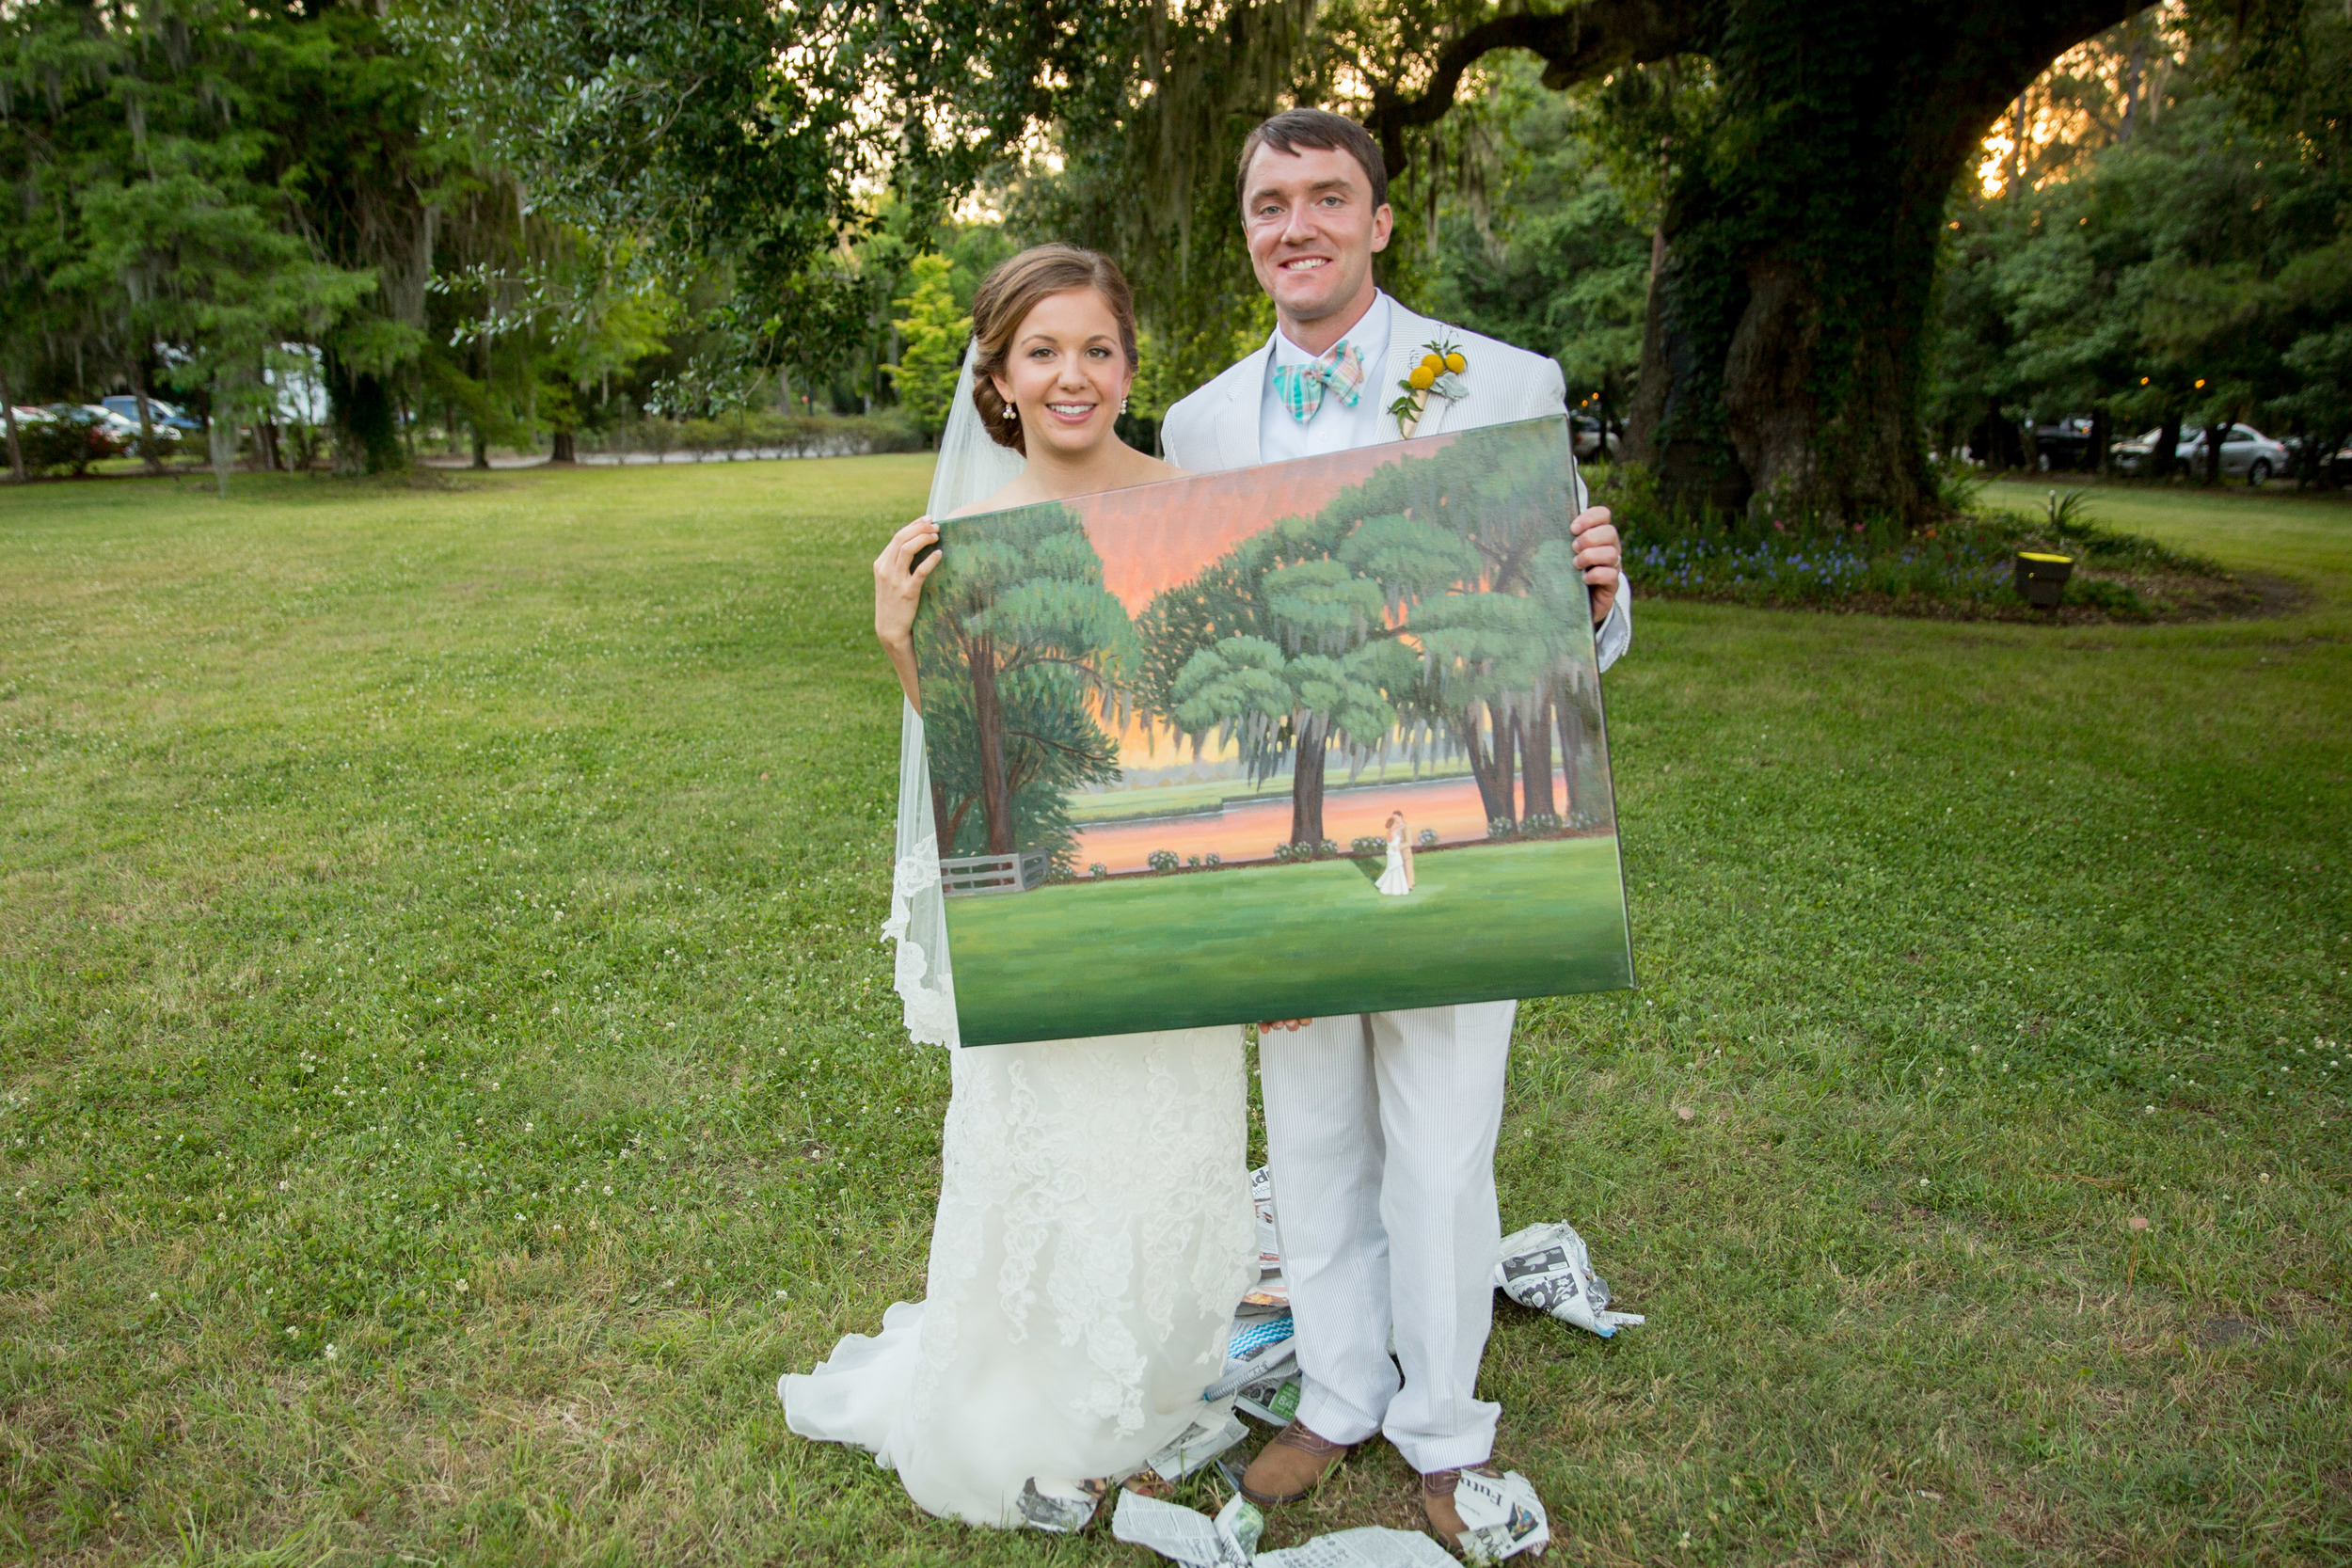 Alice Keeney Photography // Magnolia Plantation and Gardens // Charleston Wedding // Southern Protocol